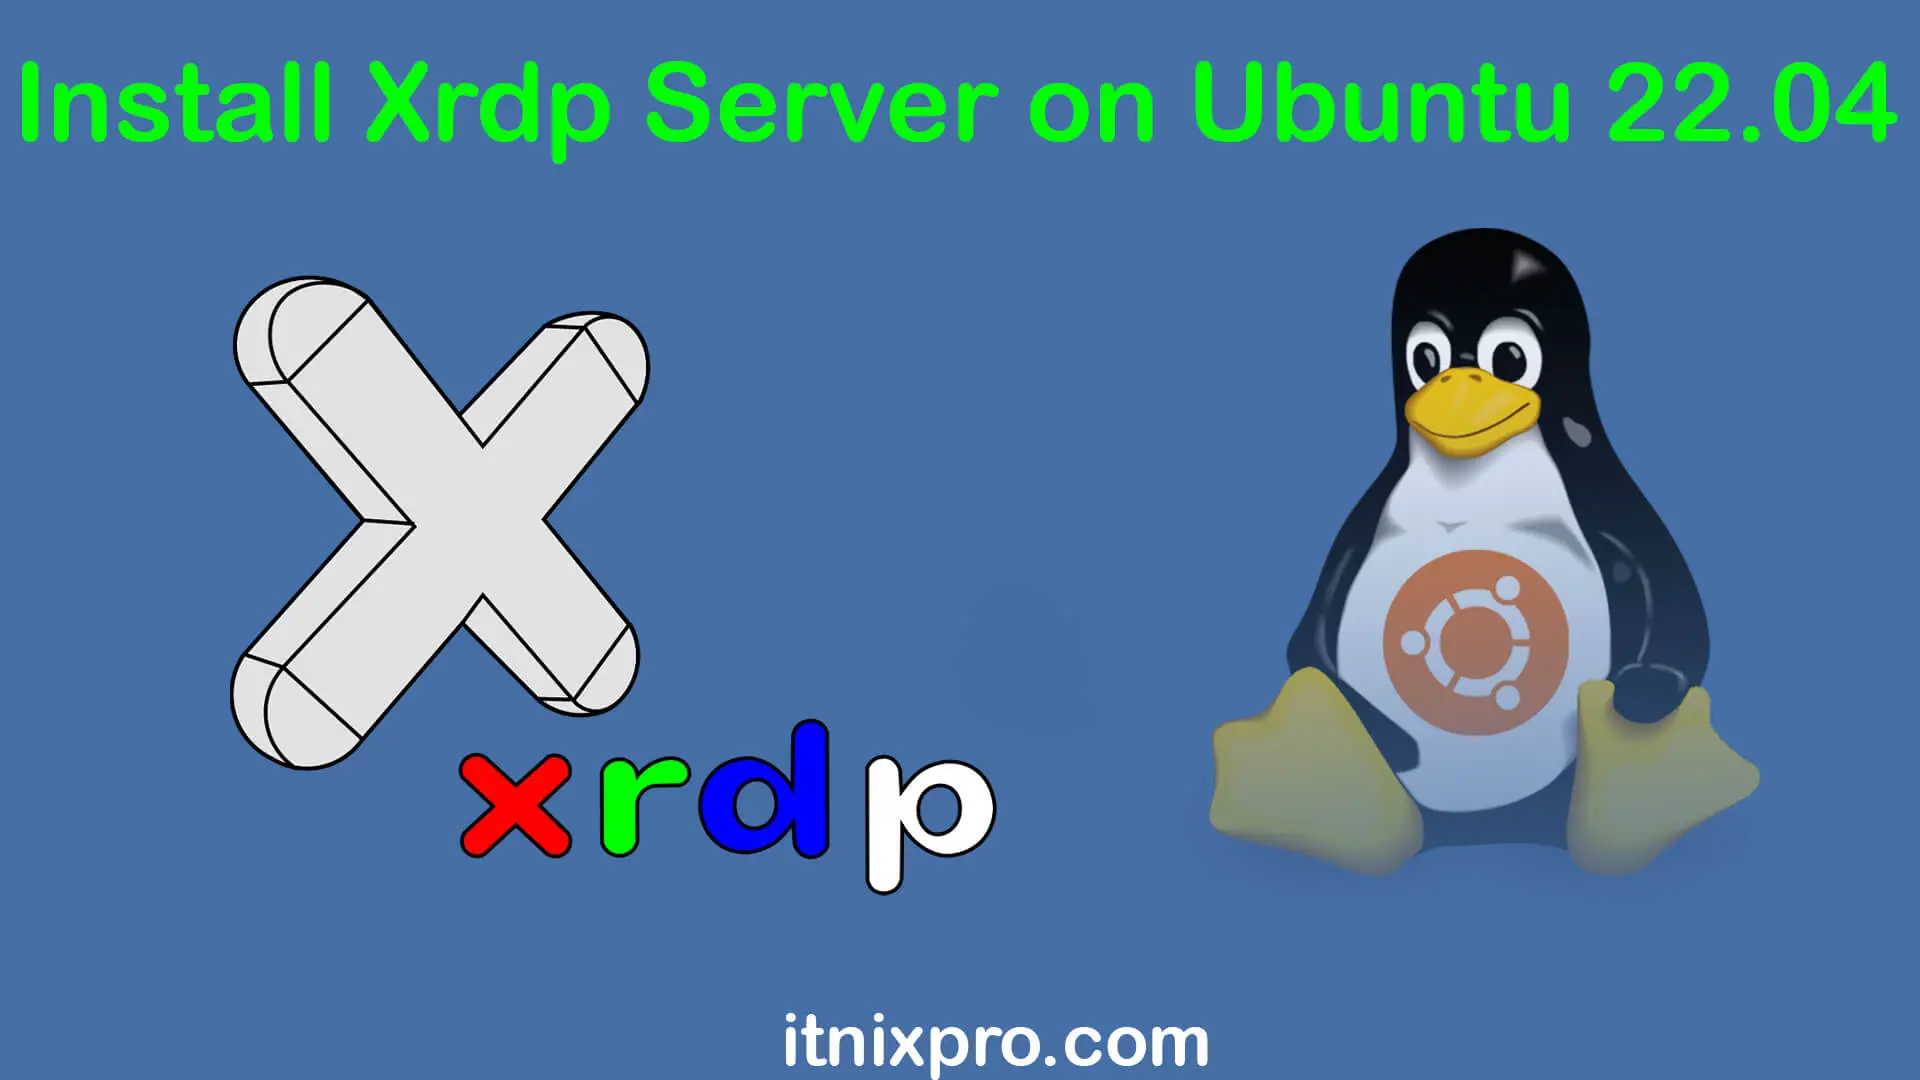 Install Xrdp Server on Ubuntu 22.04